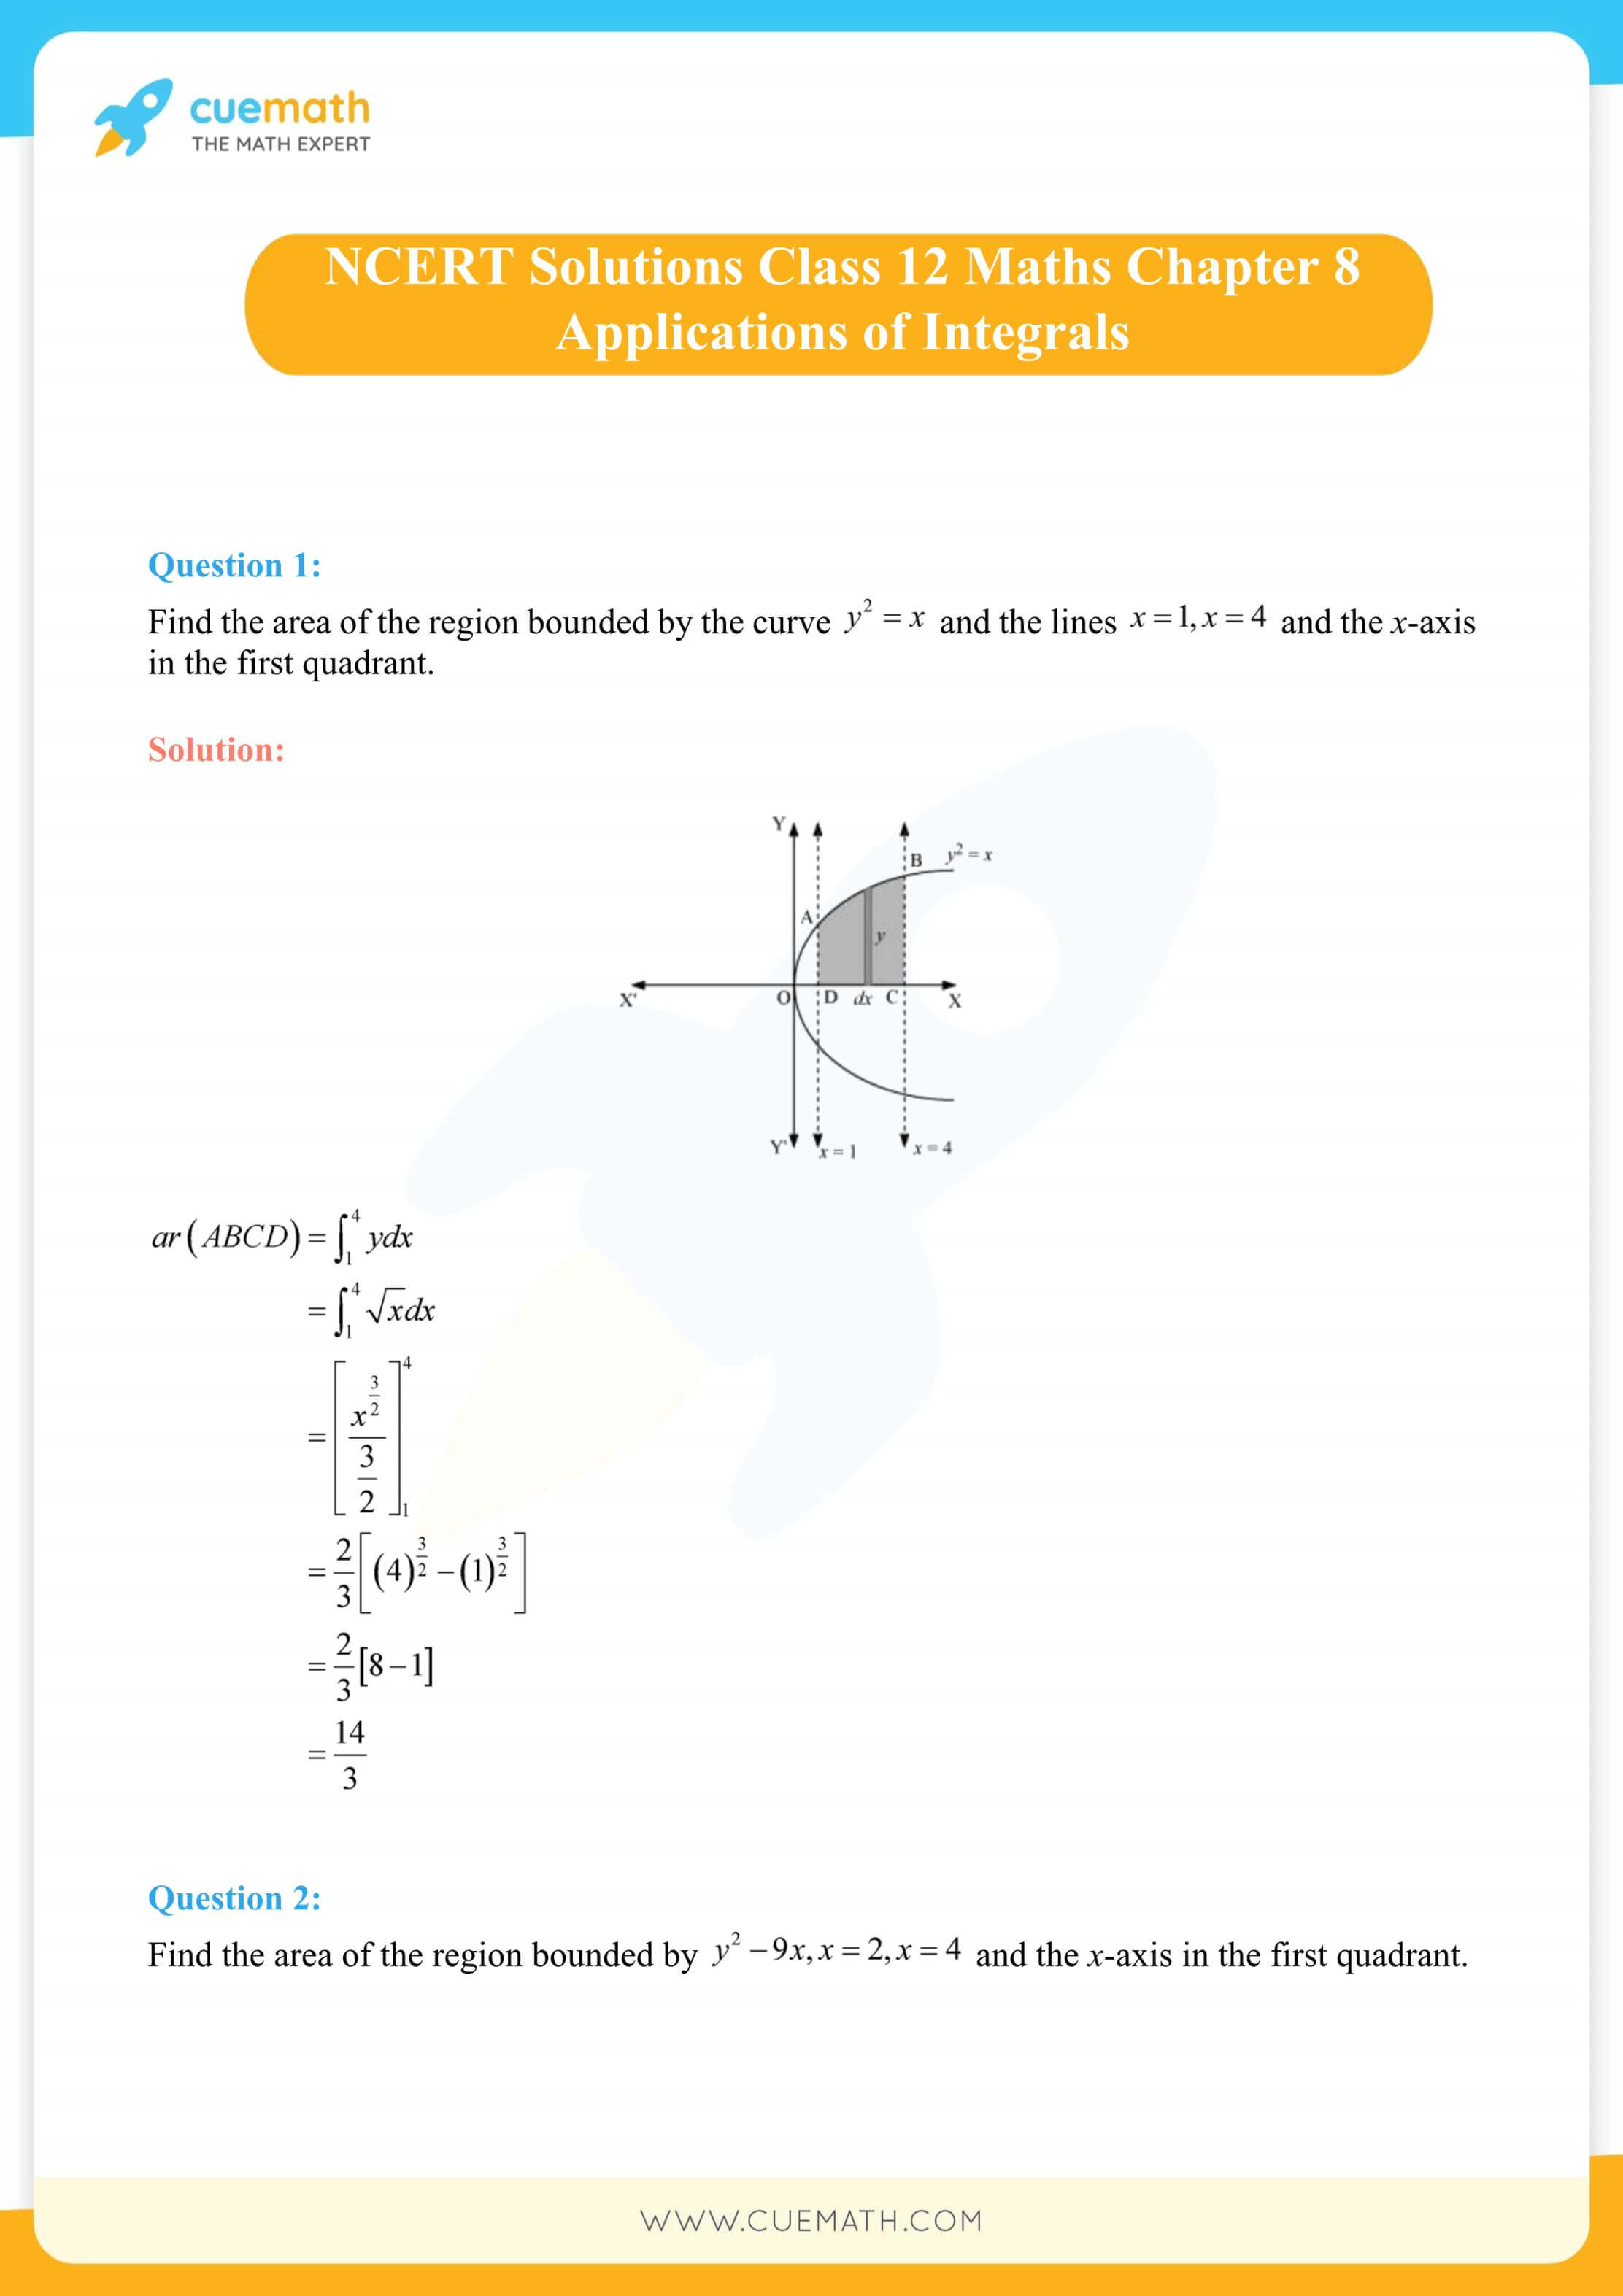 NCERT Solutions Class 12 Maths Chapter 8 Exercise 8.1 1